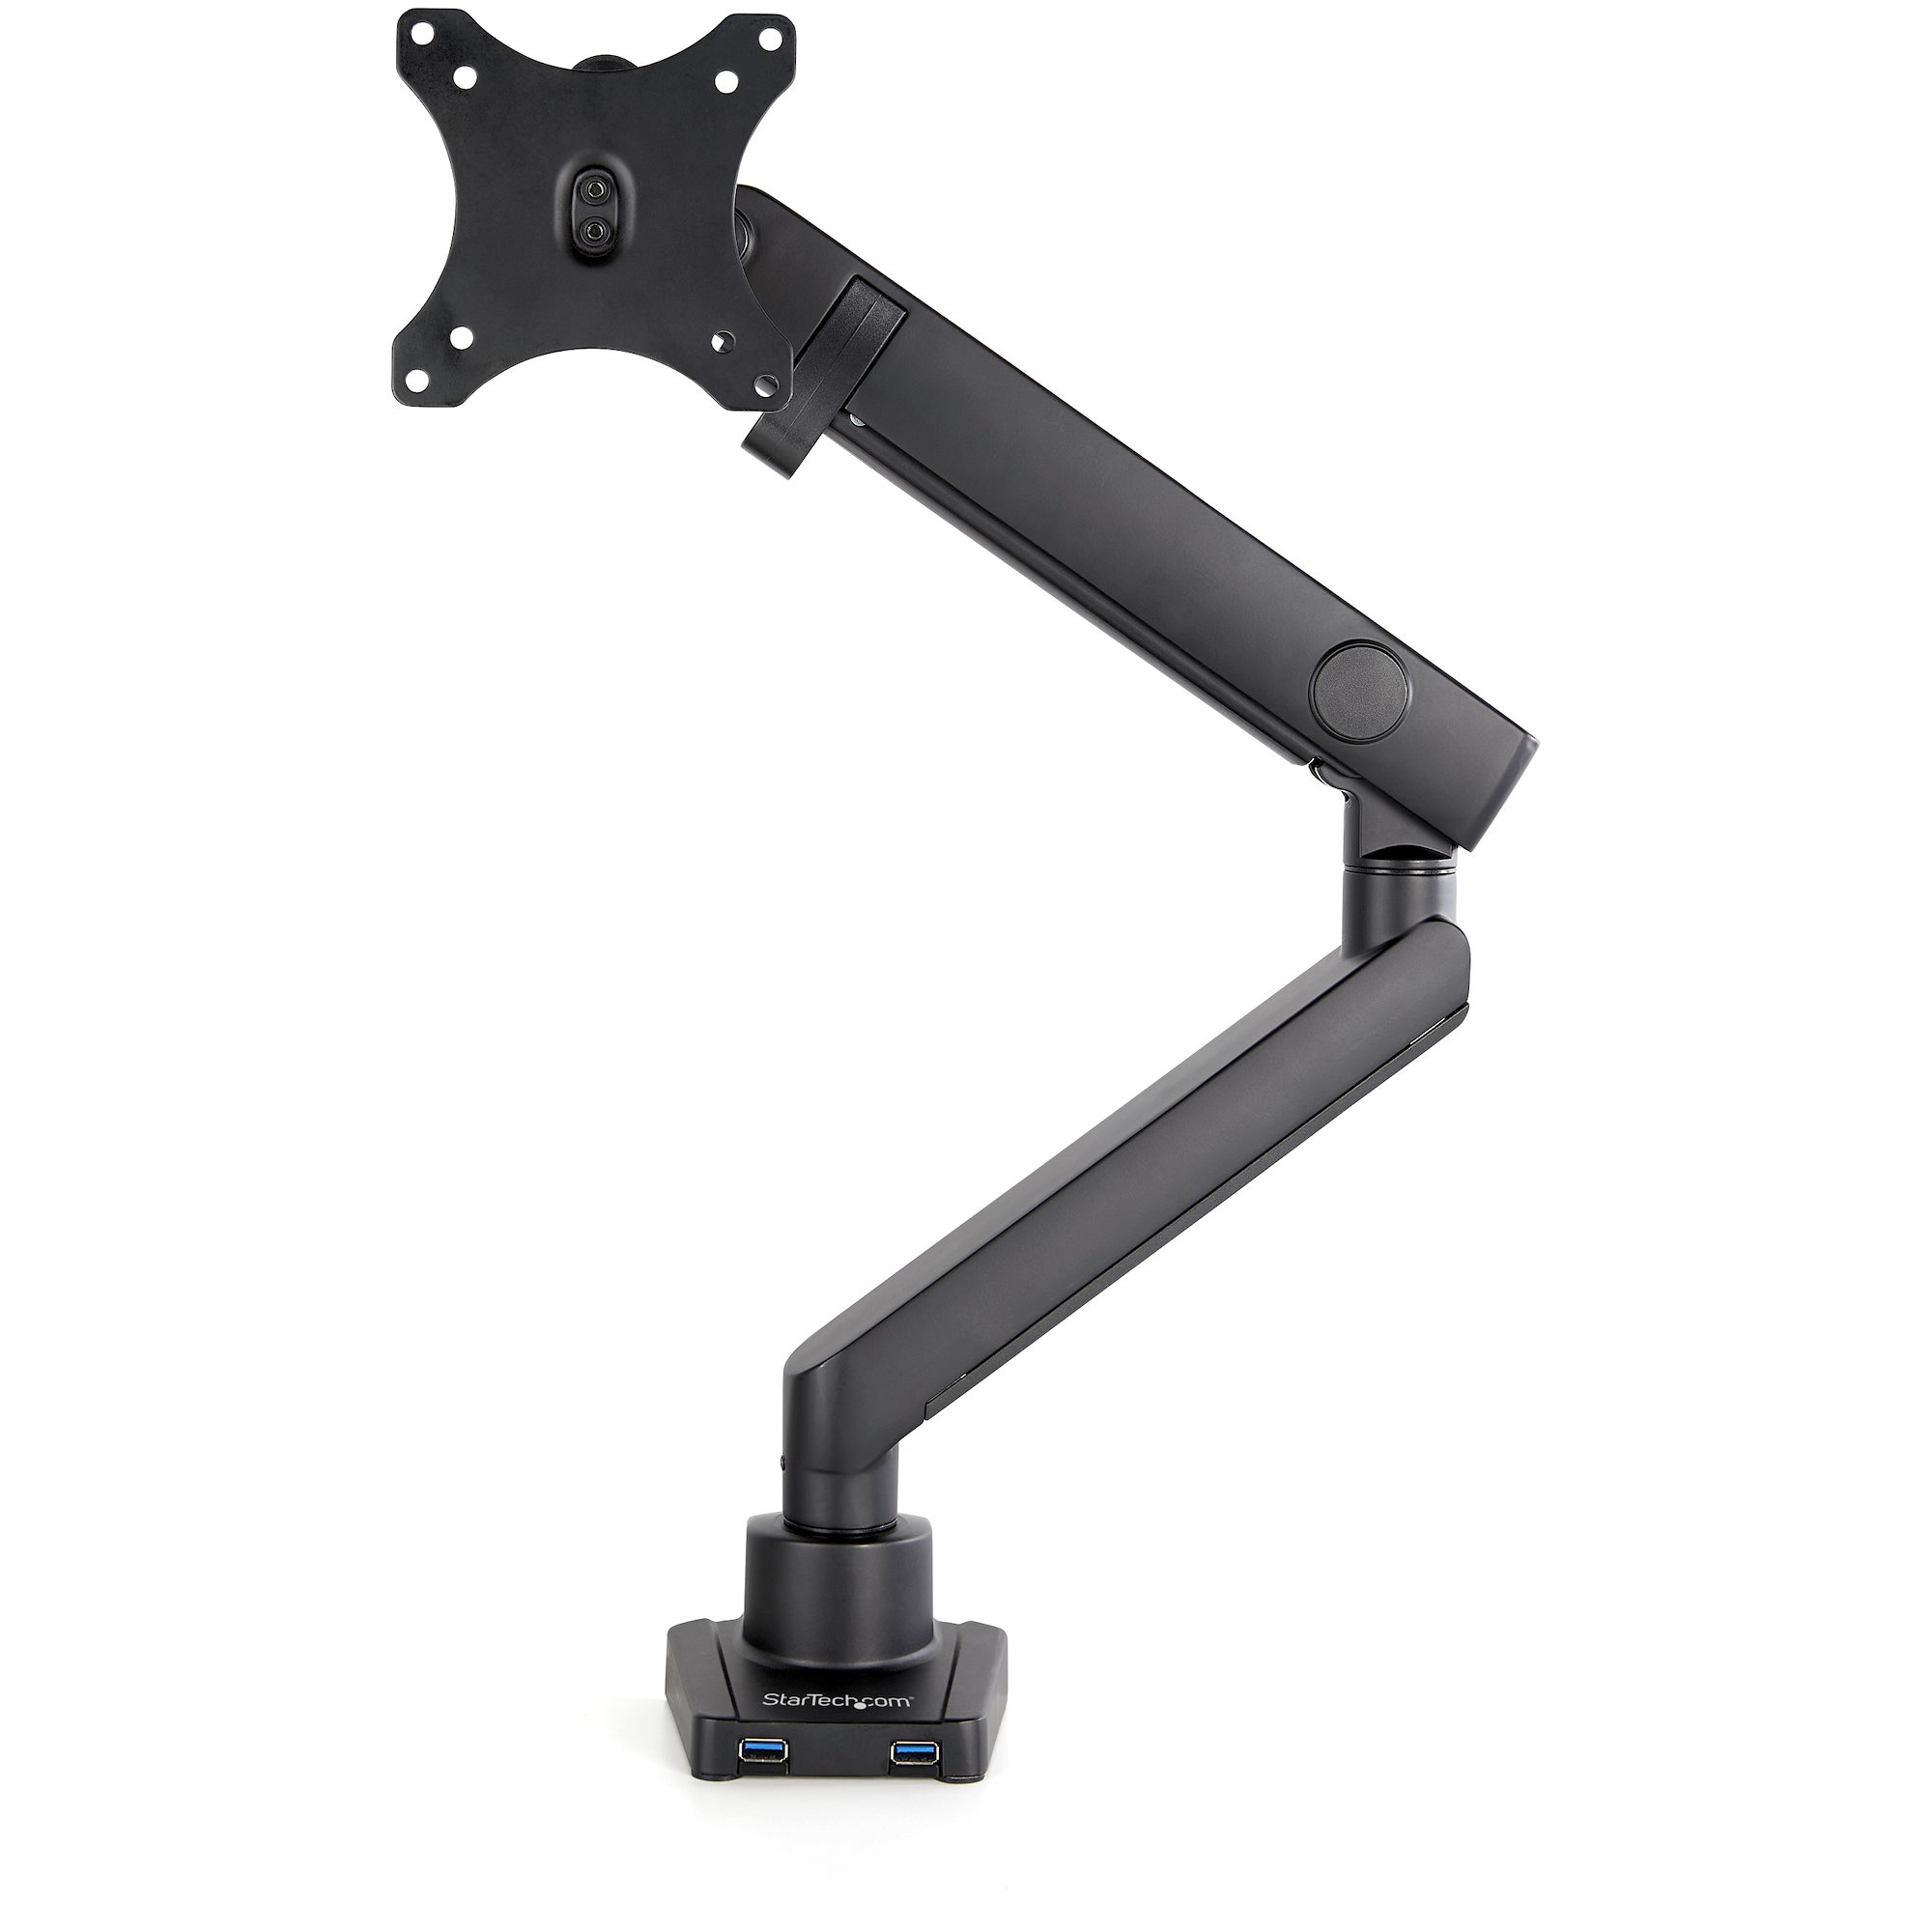 Single Monitor Arm, 20 lb lift, VESA, audio USB ports